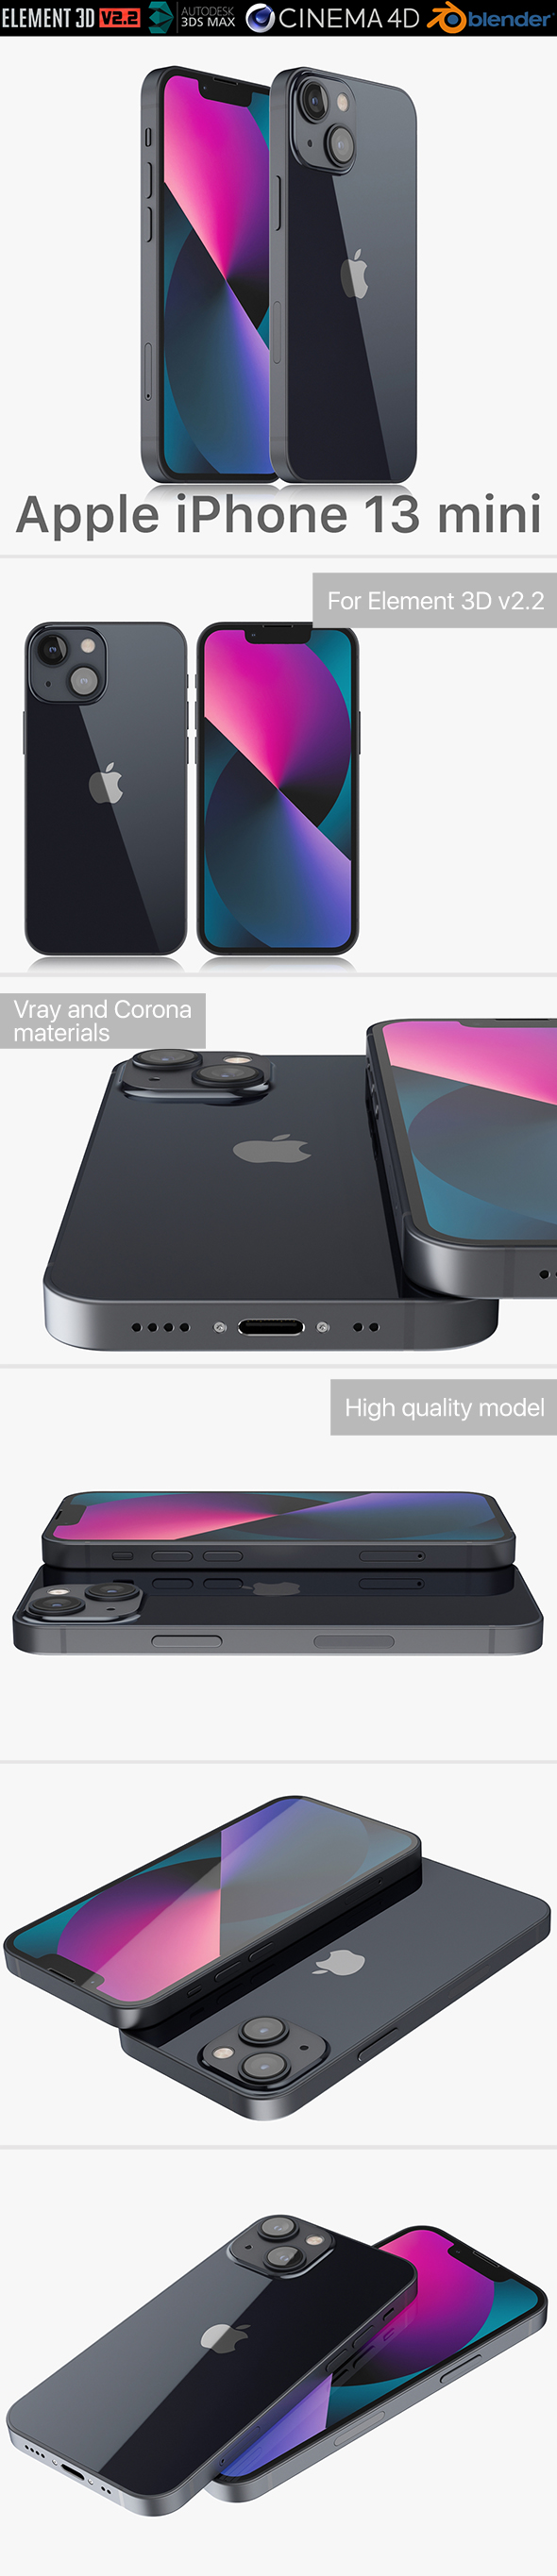 Apple iPhone 13 - 3Docean 34097000